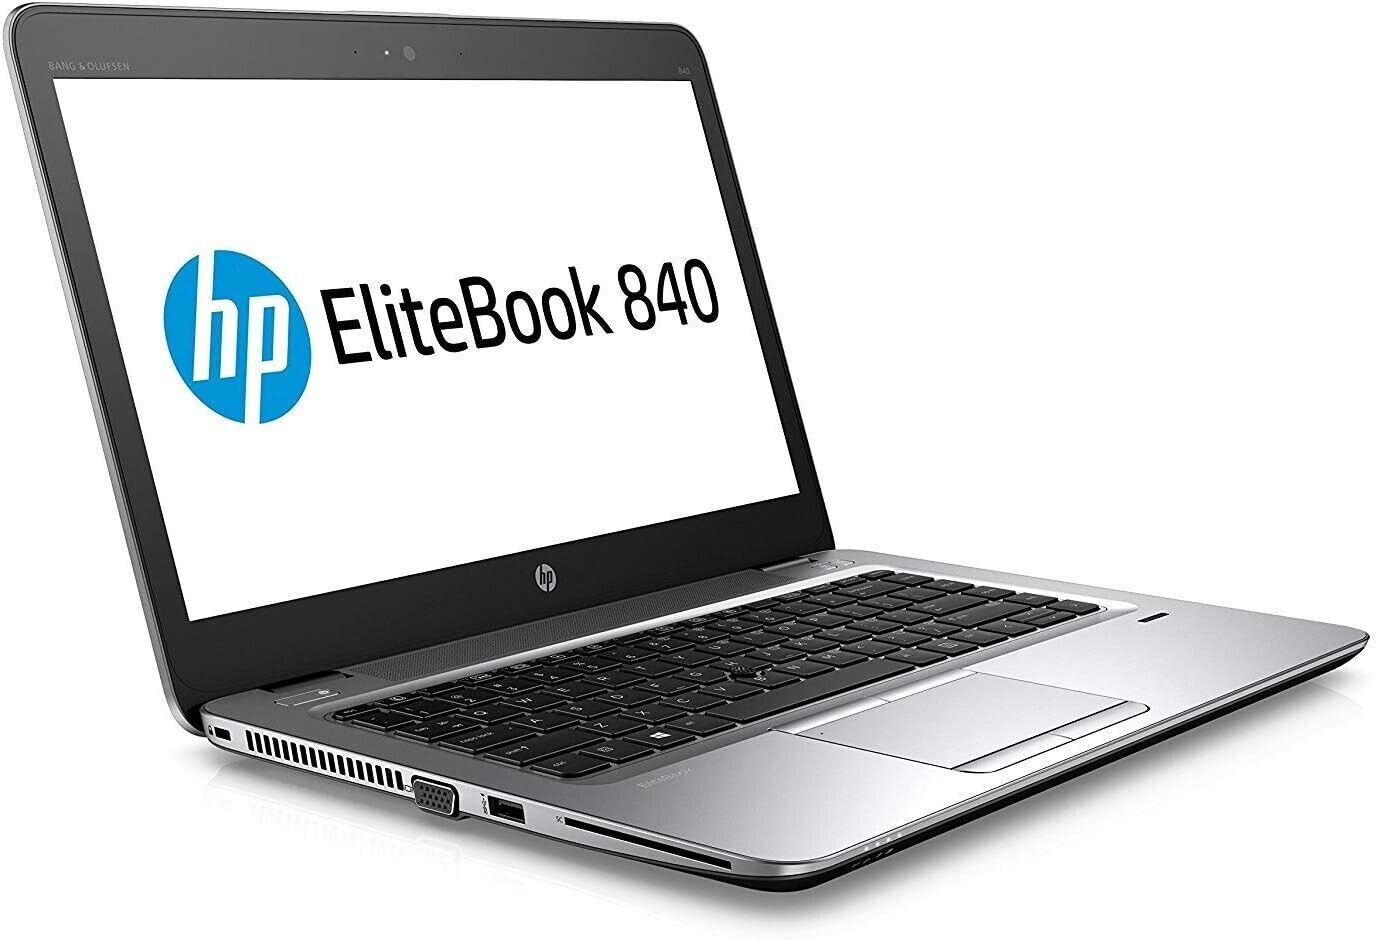 HP Elitebook 840 G4 Laptop - Intel i5 8th gen. 128GB SSD, 8GB Ram